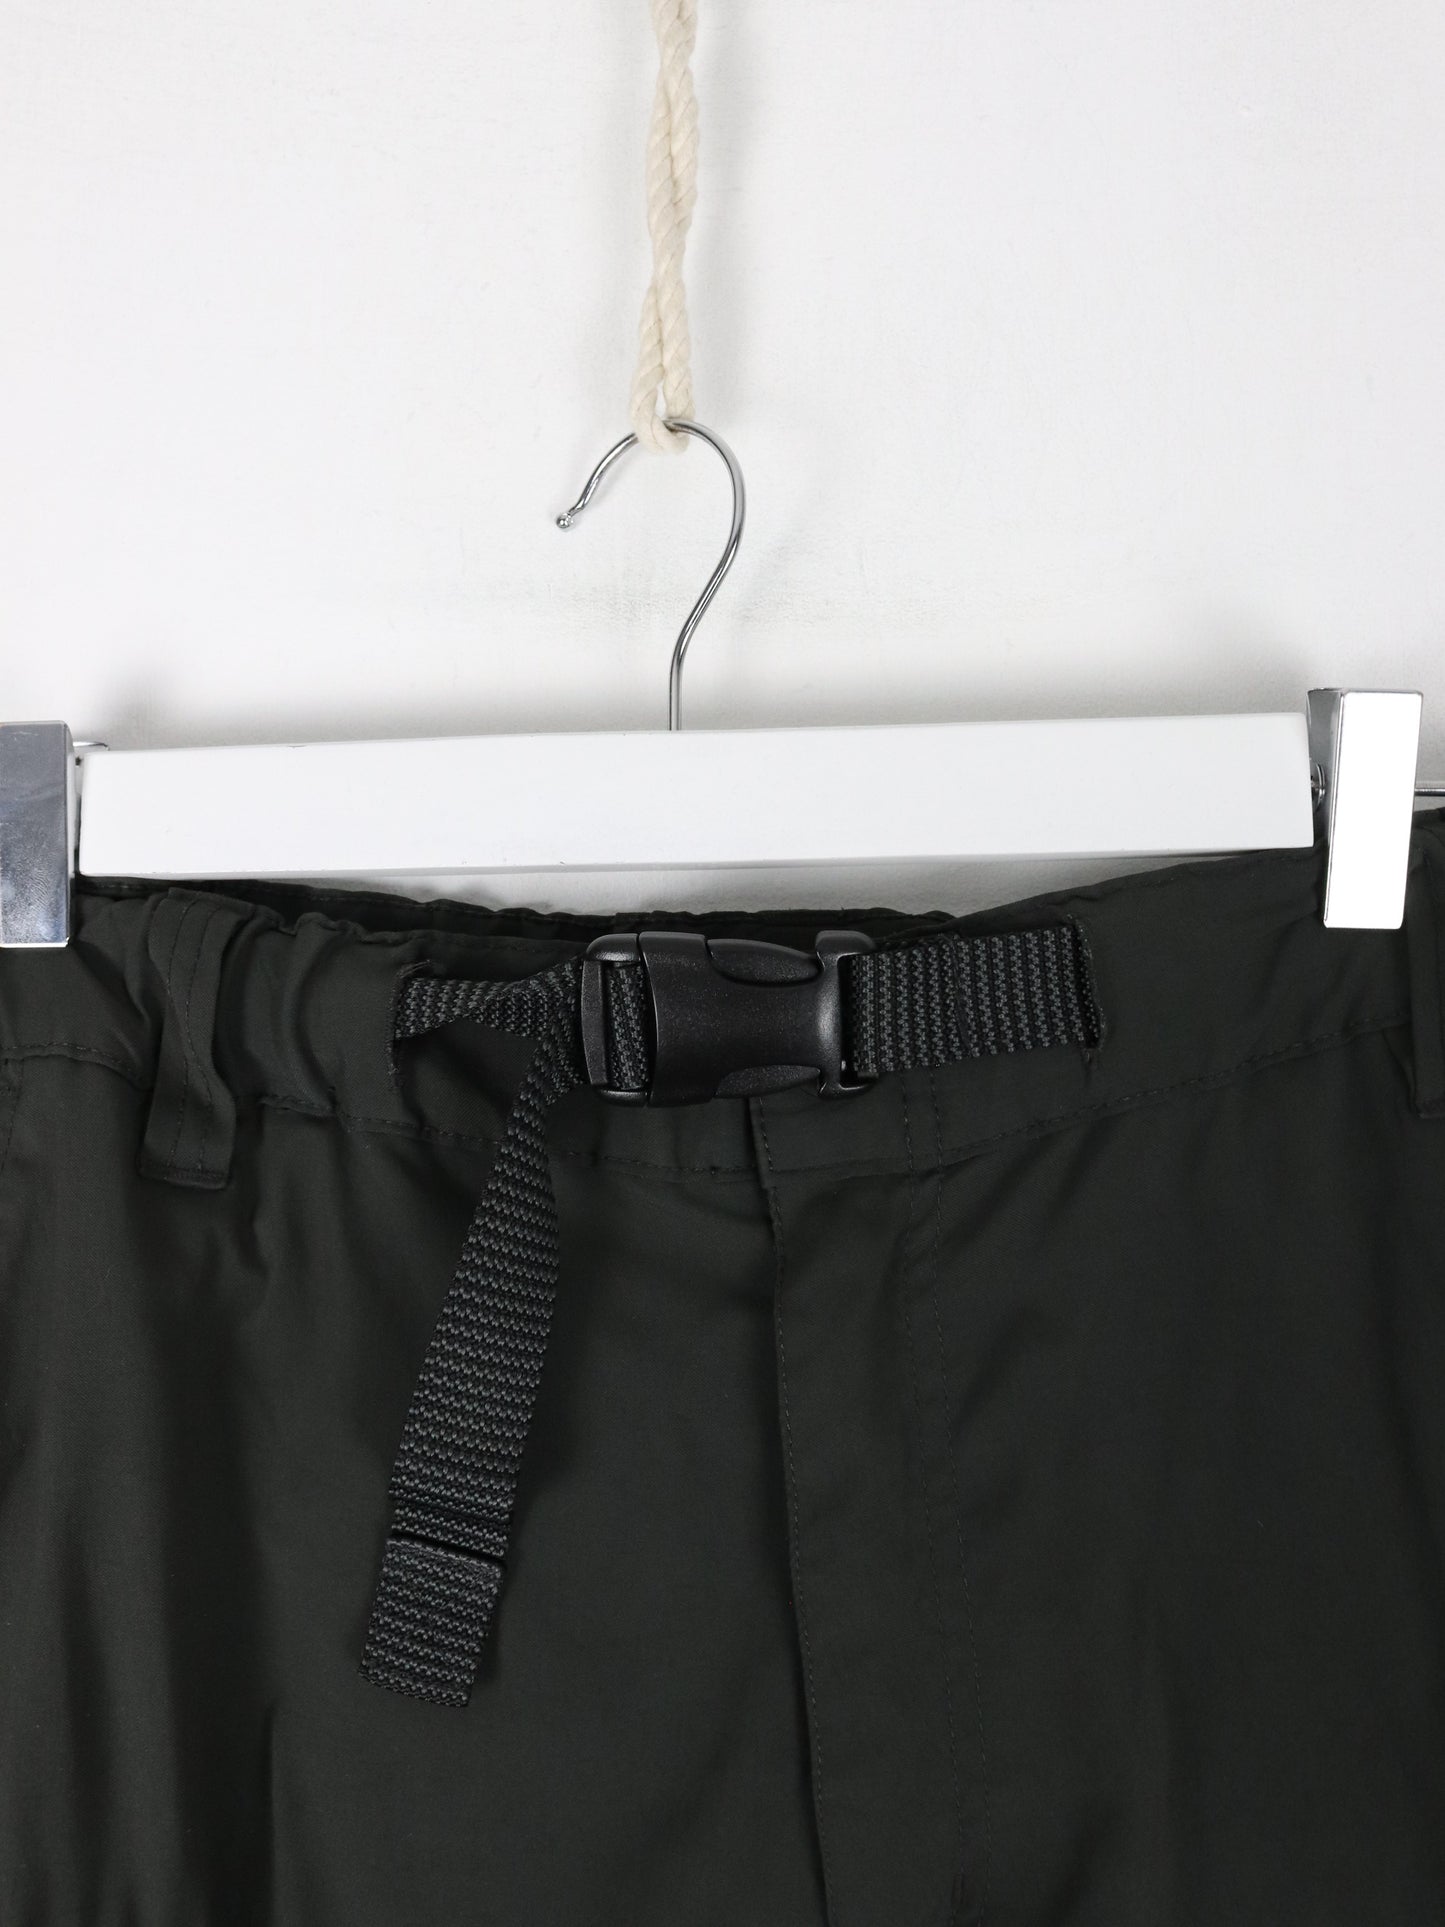 BC Clothing Shorts Mens Medium Grey Cargo Hiking